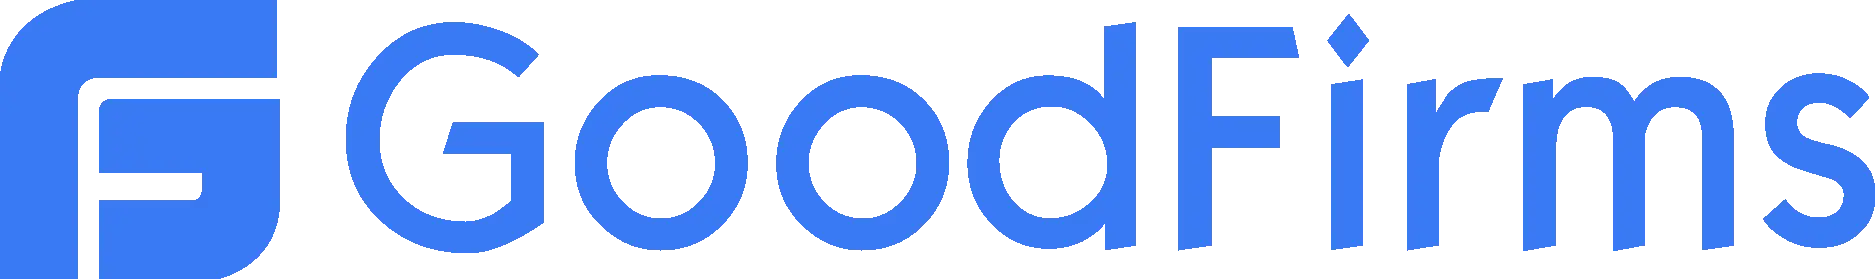 goodFirms-logo